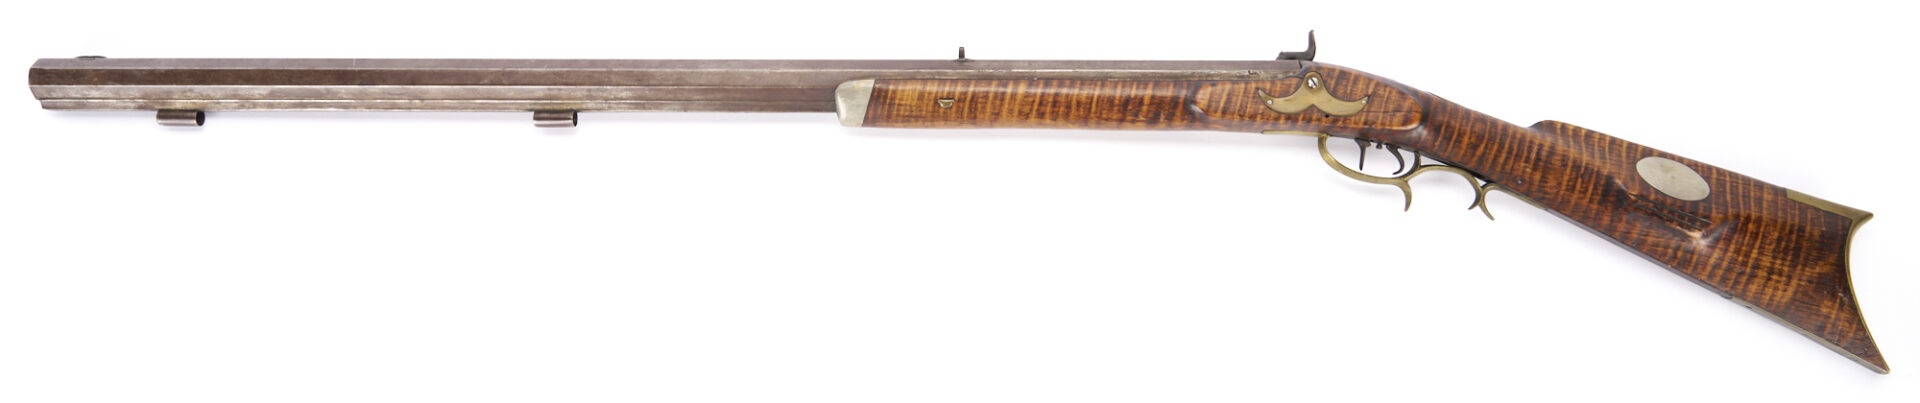 Lot 525: J. Griffith .52 cal Muzzleloading Rifle; Cincinnati; Walter Cline Collection